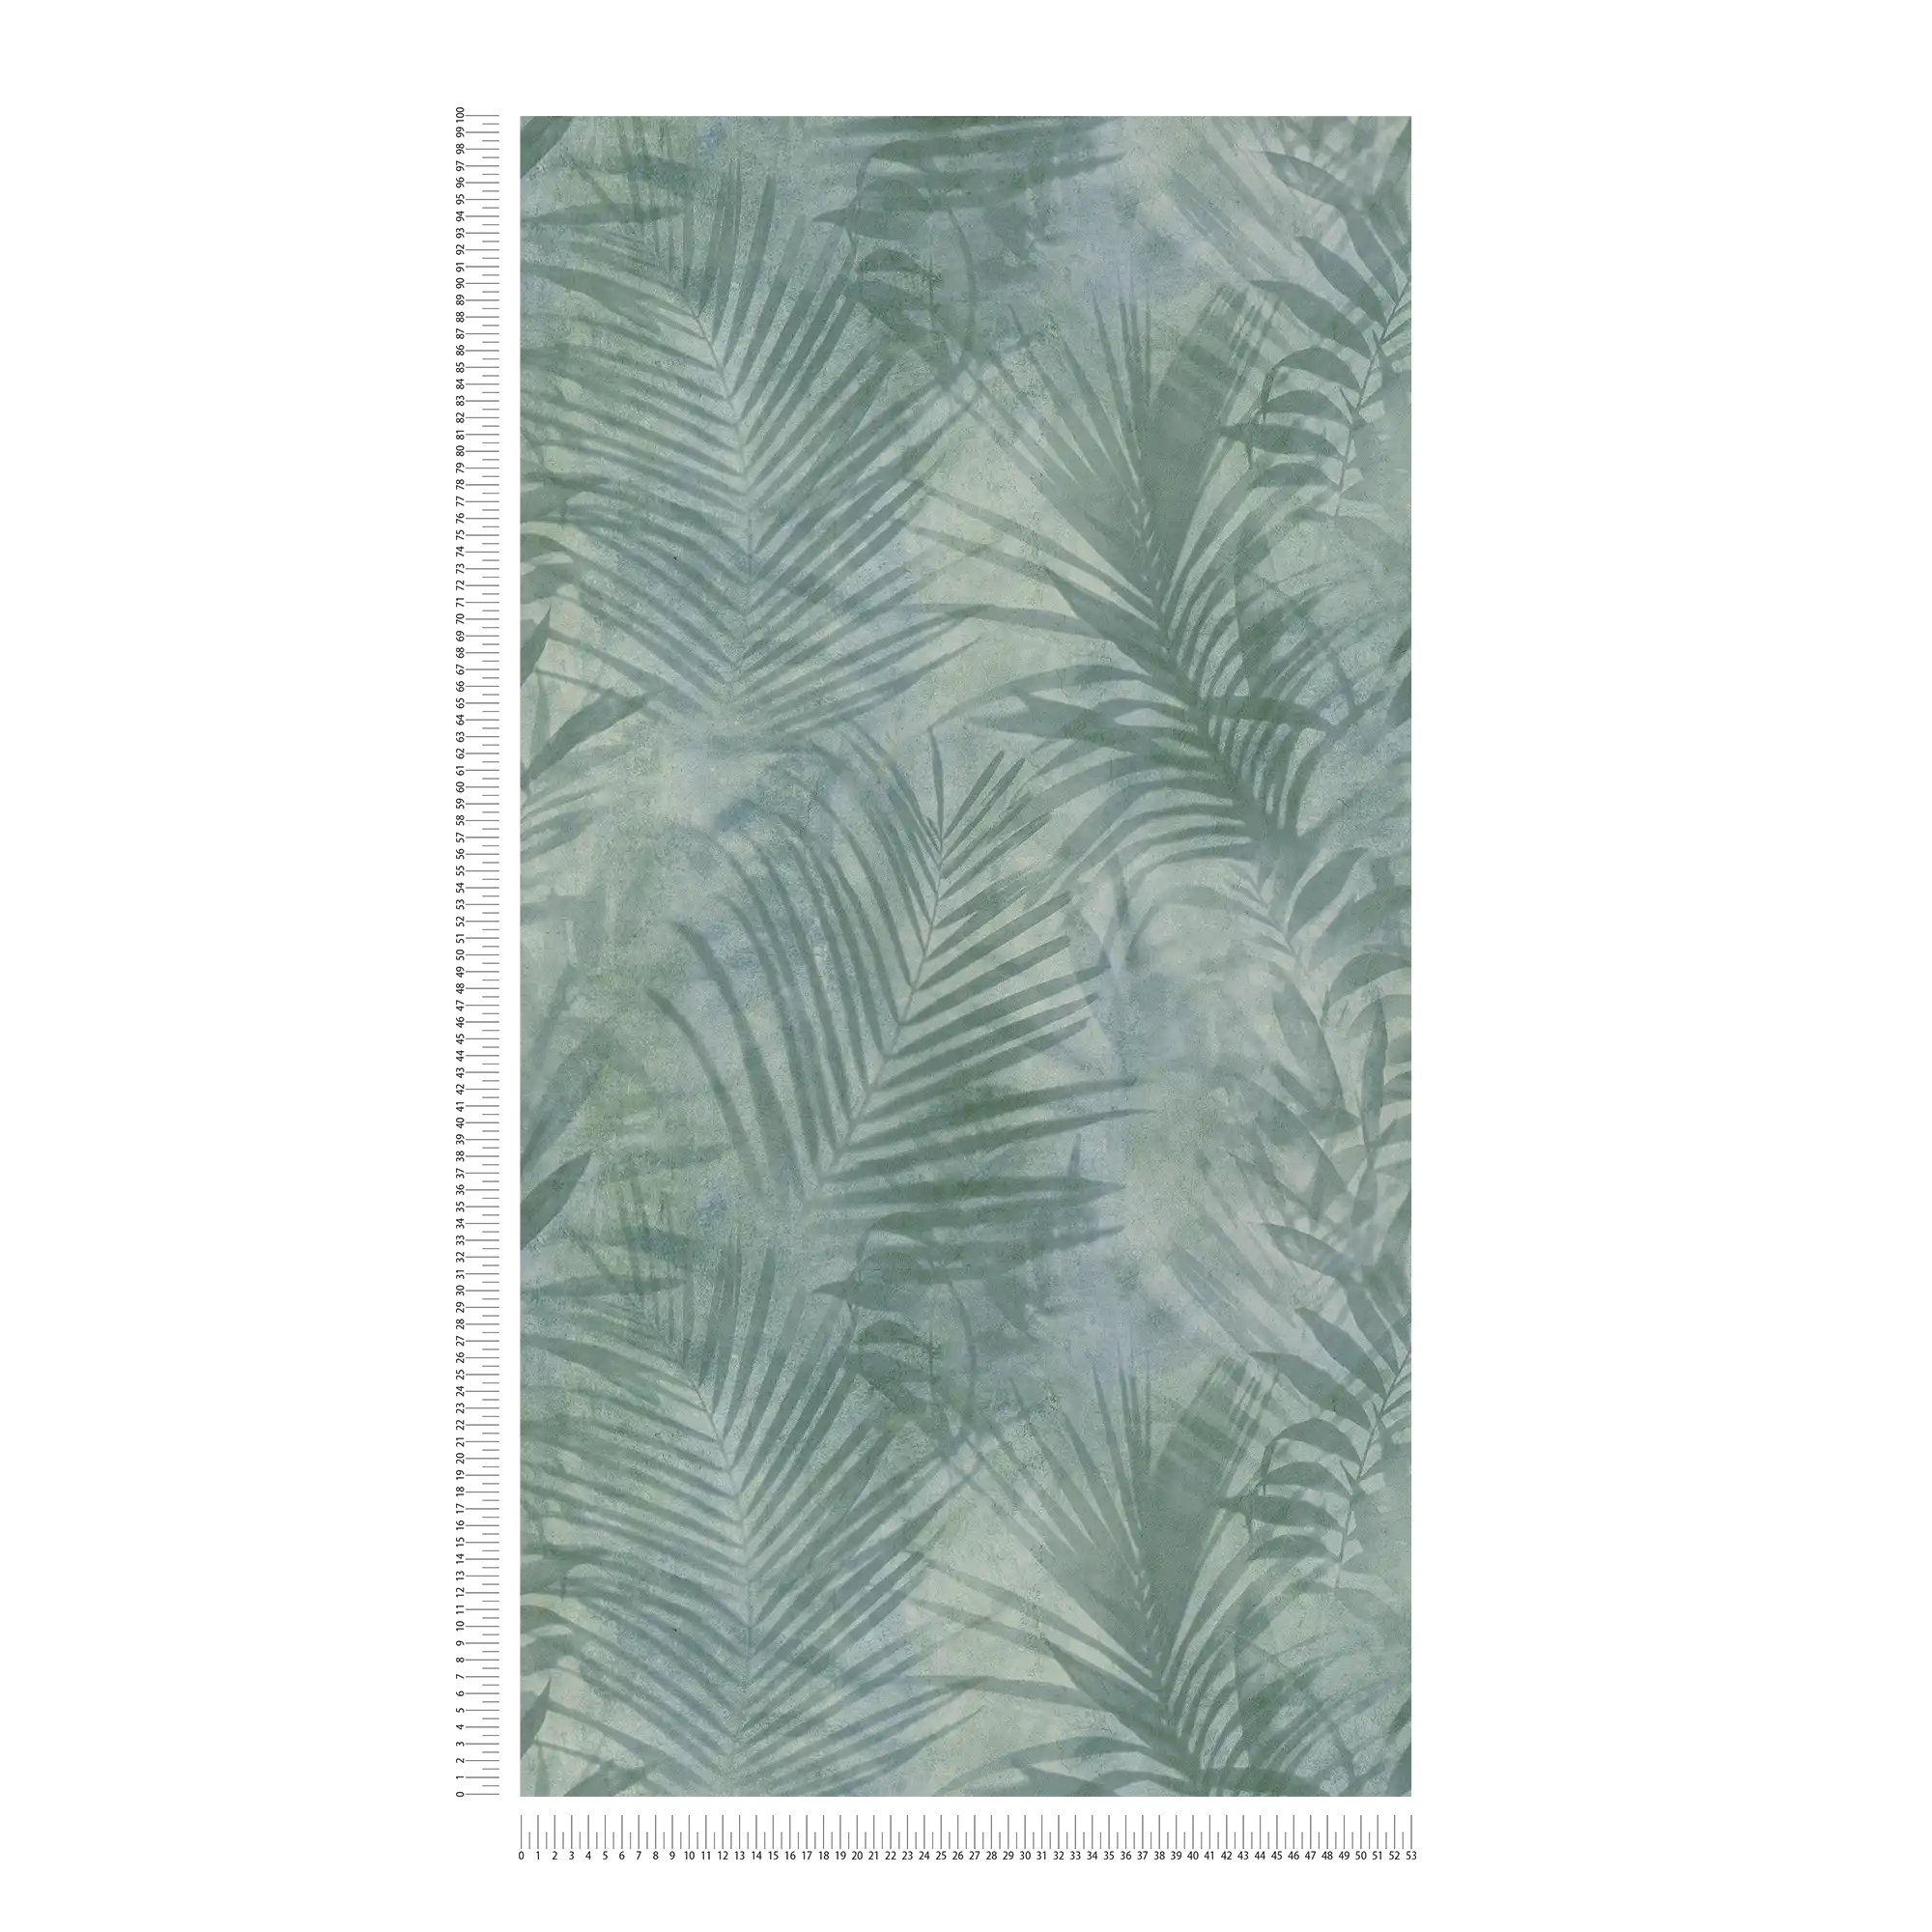             Tapete Palmenmuster in Leinenoptik – Grün, Blau, Grau
        